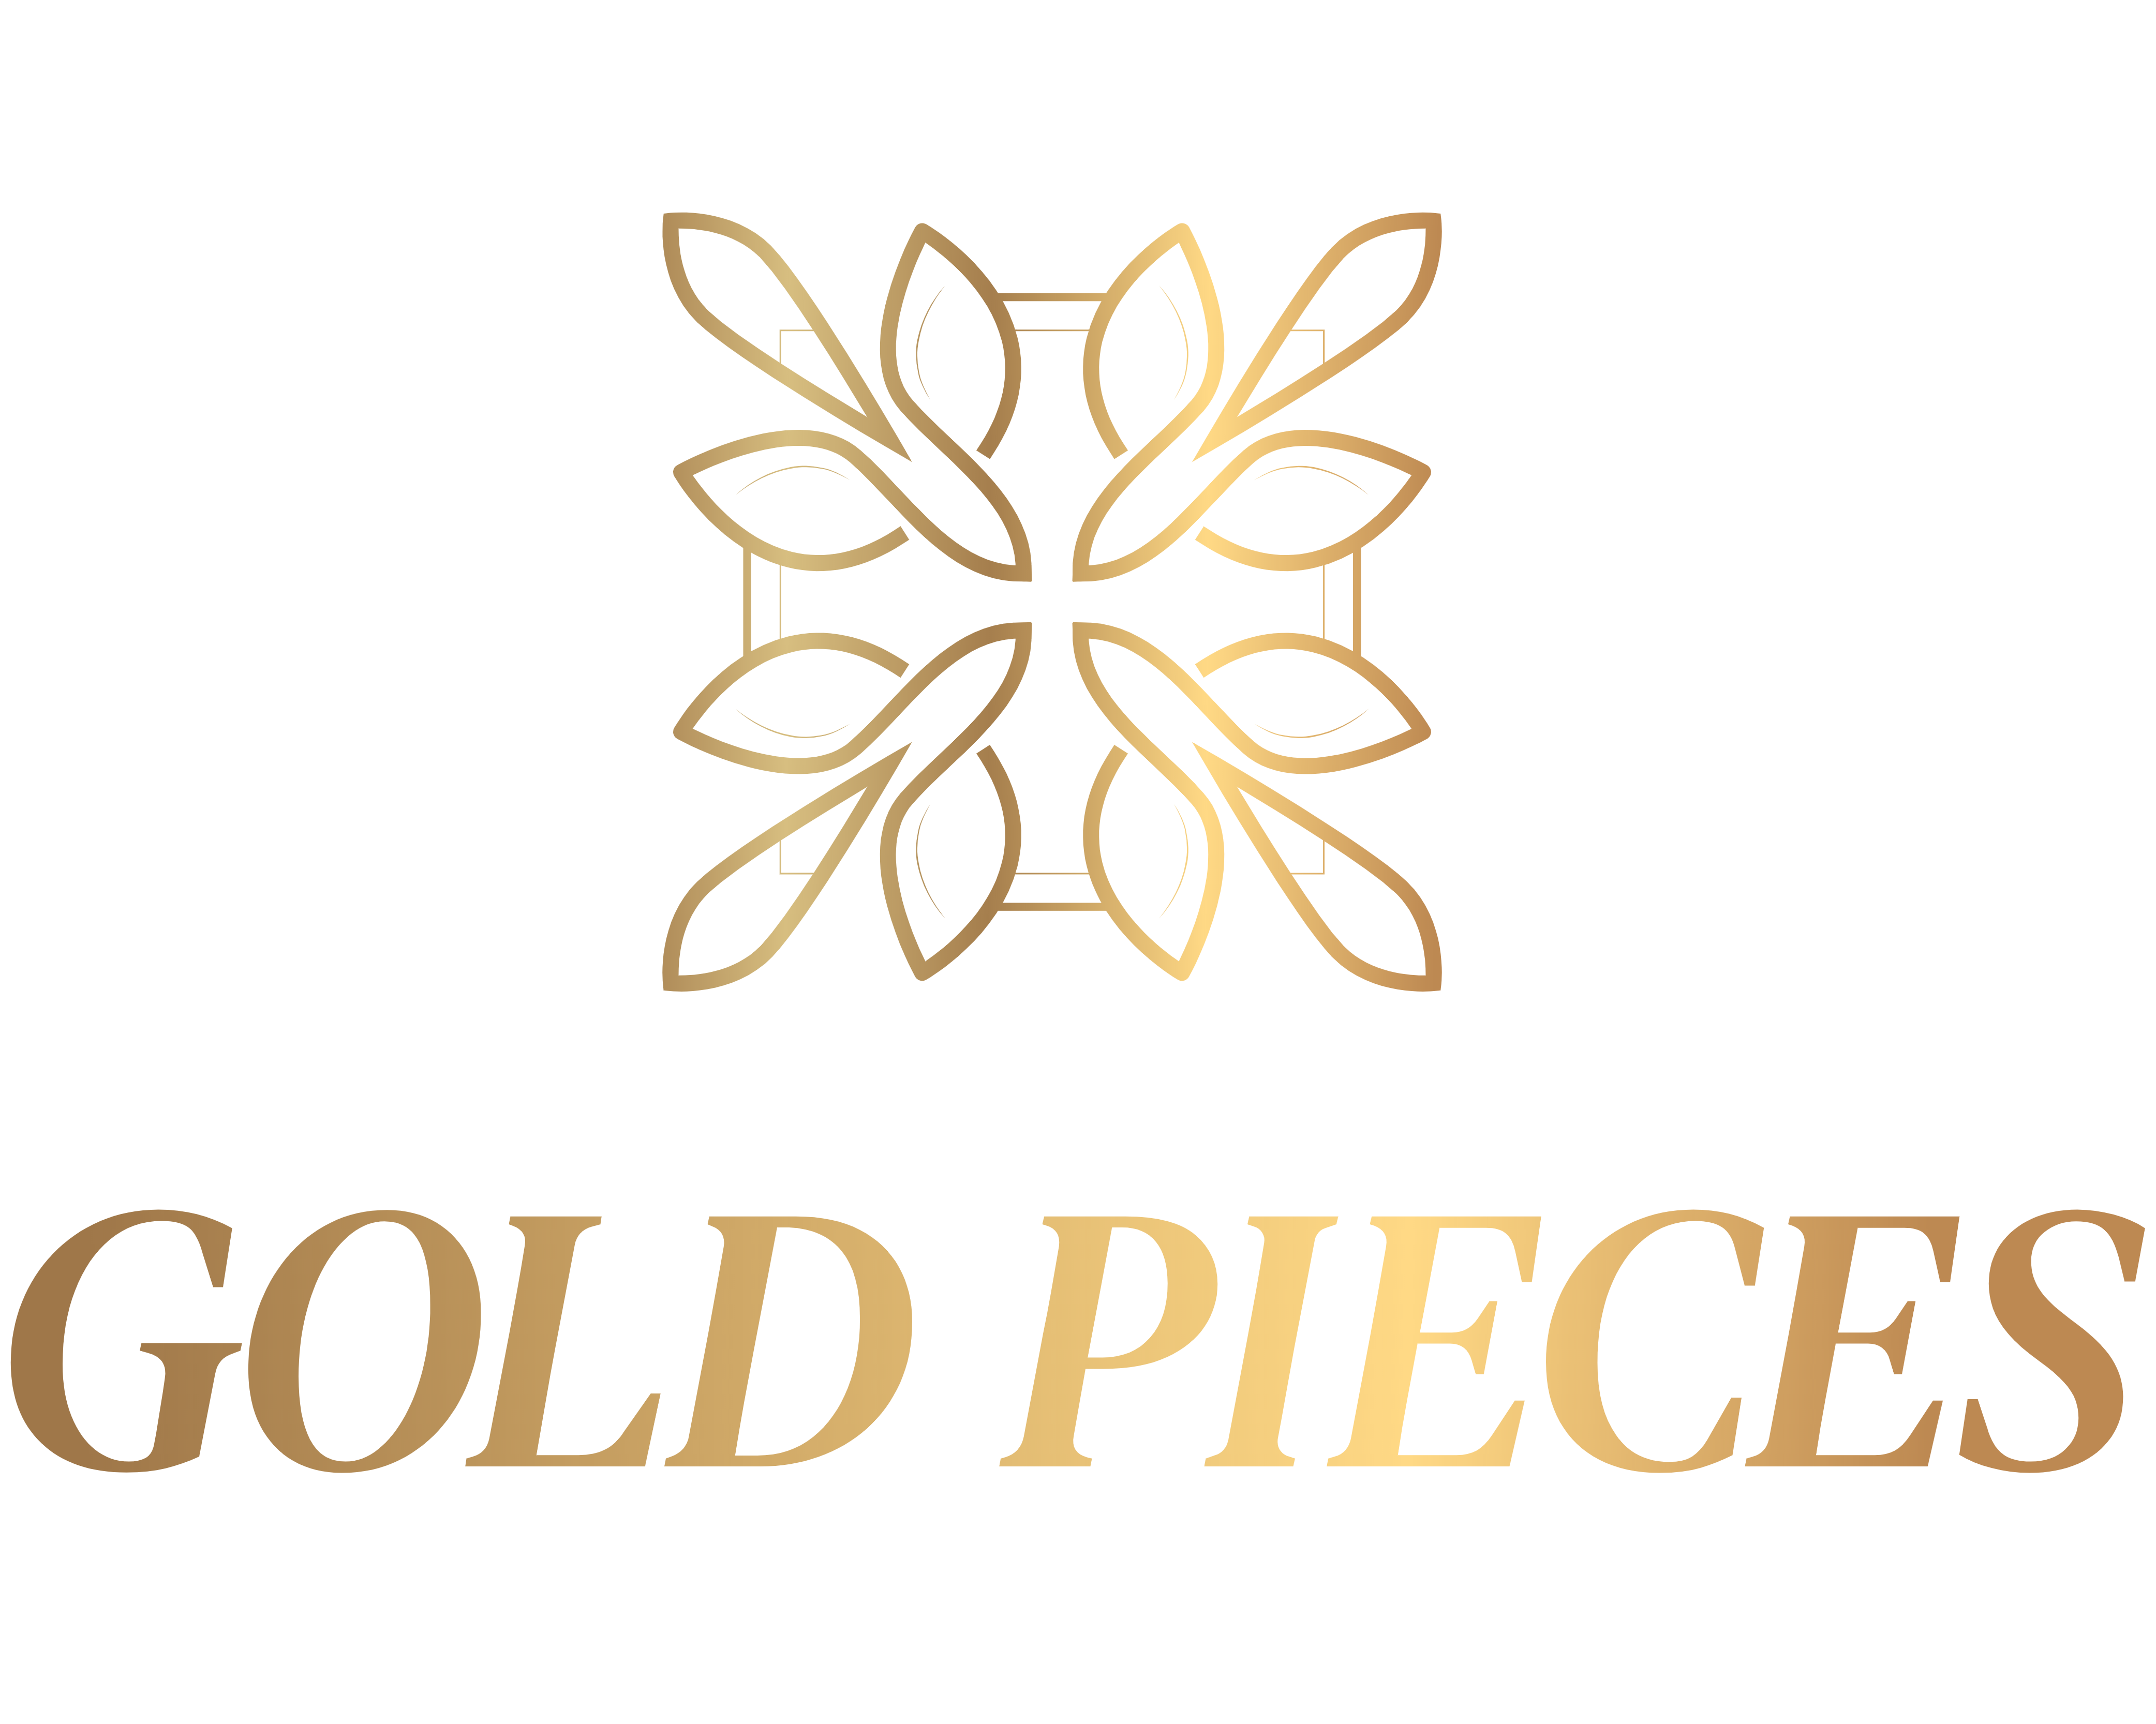 Goldpieces Goldbesteck Onlineshop Besteck Gold Kerzen Trinkhalme Servietten